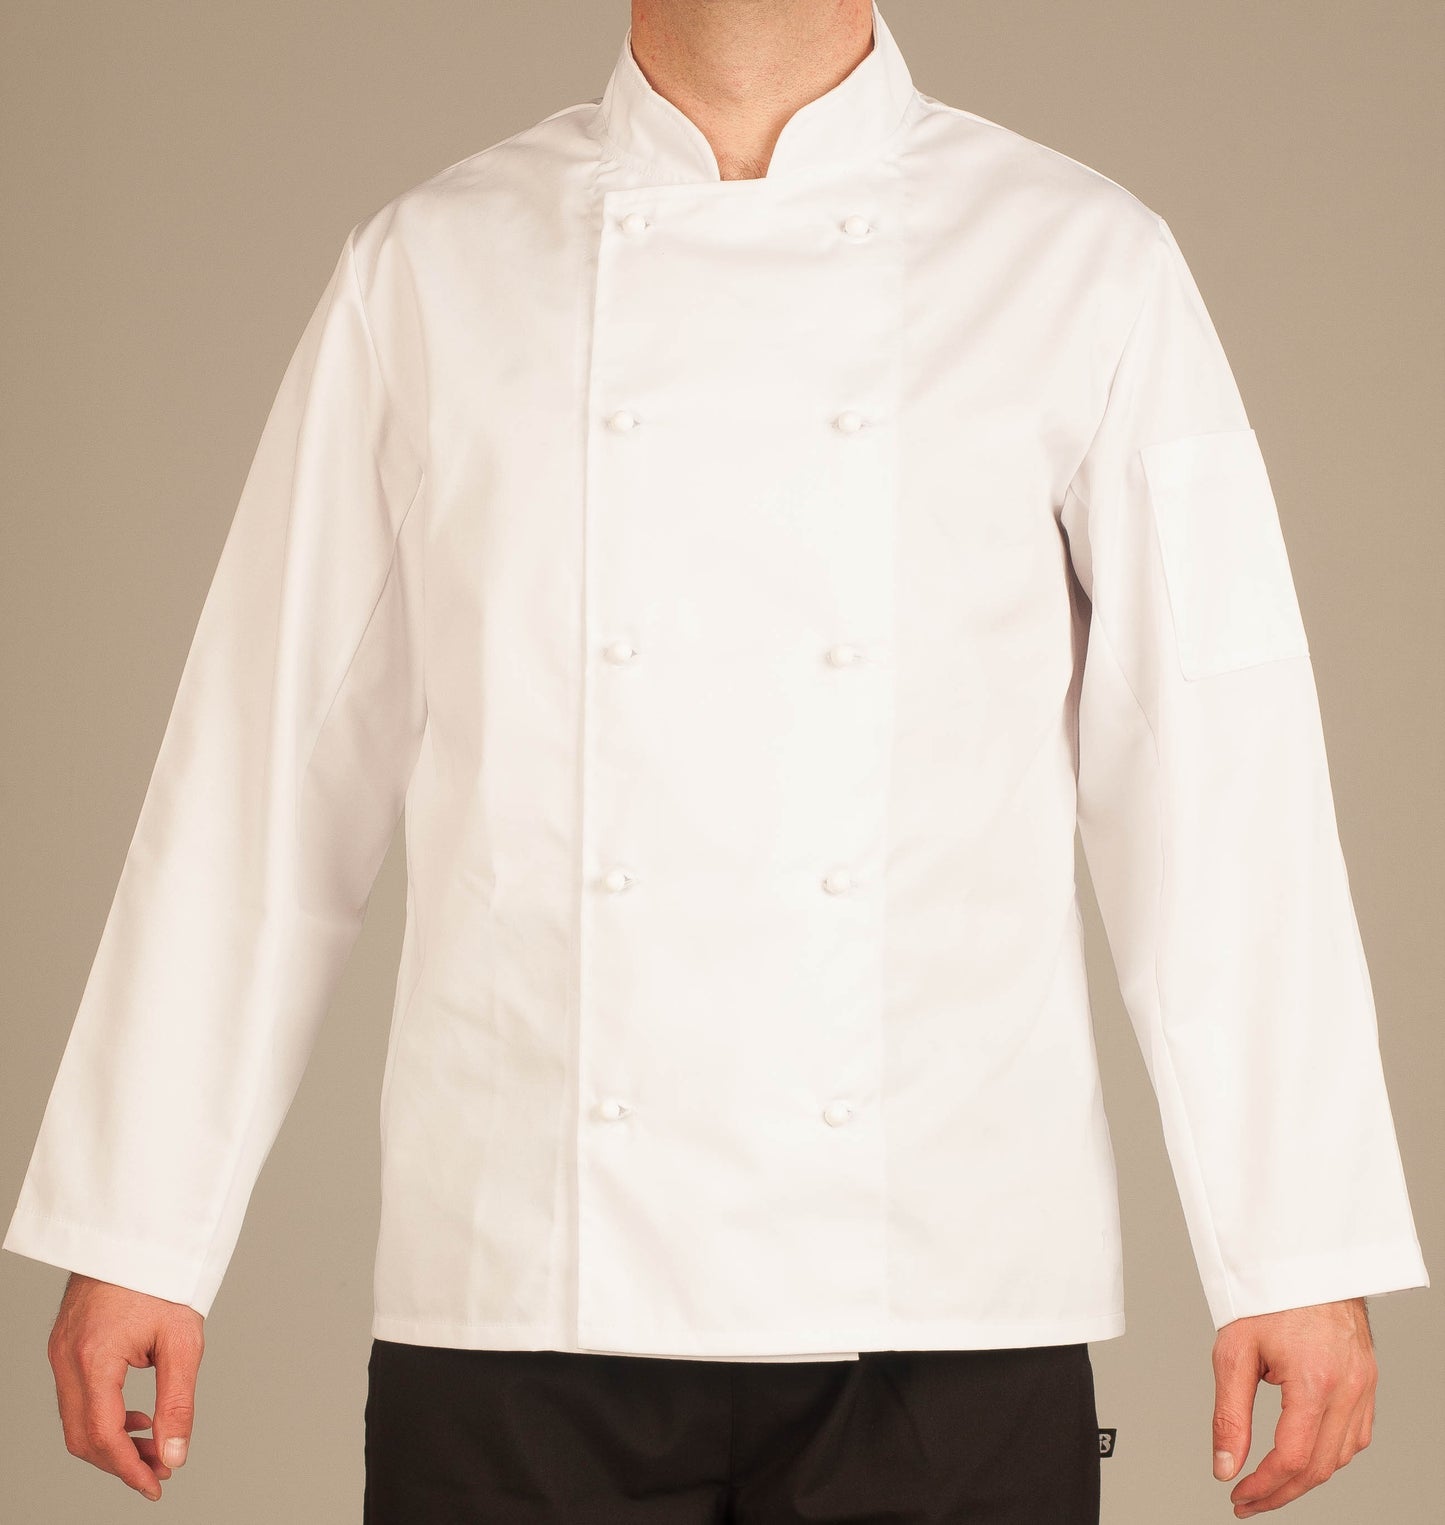 Long sleeve white chefs jacket.